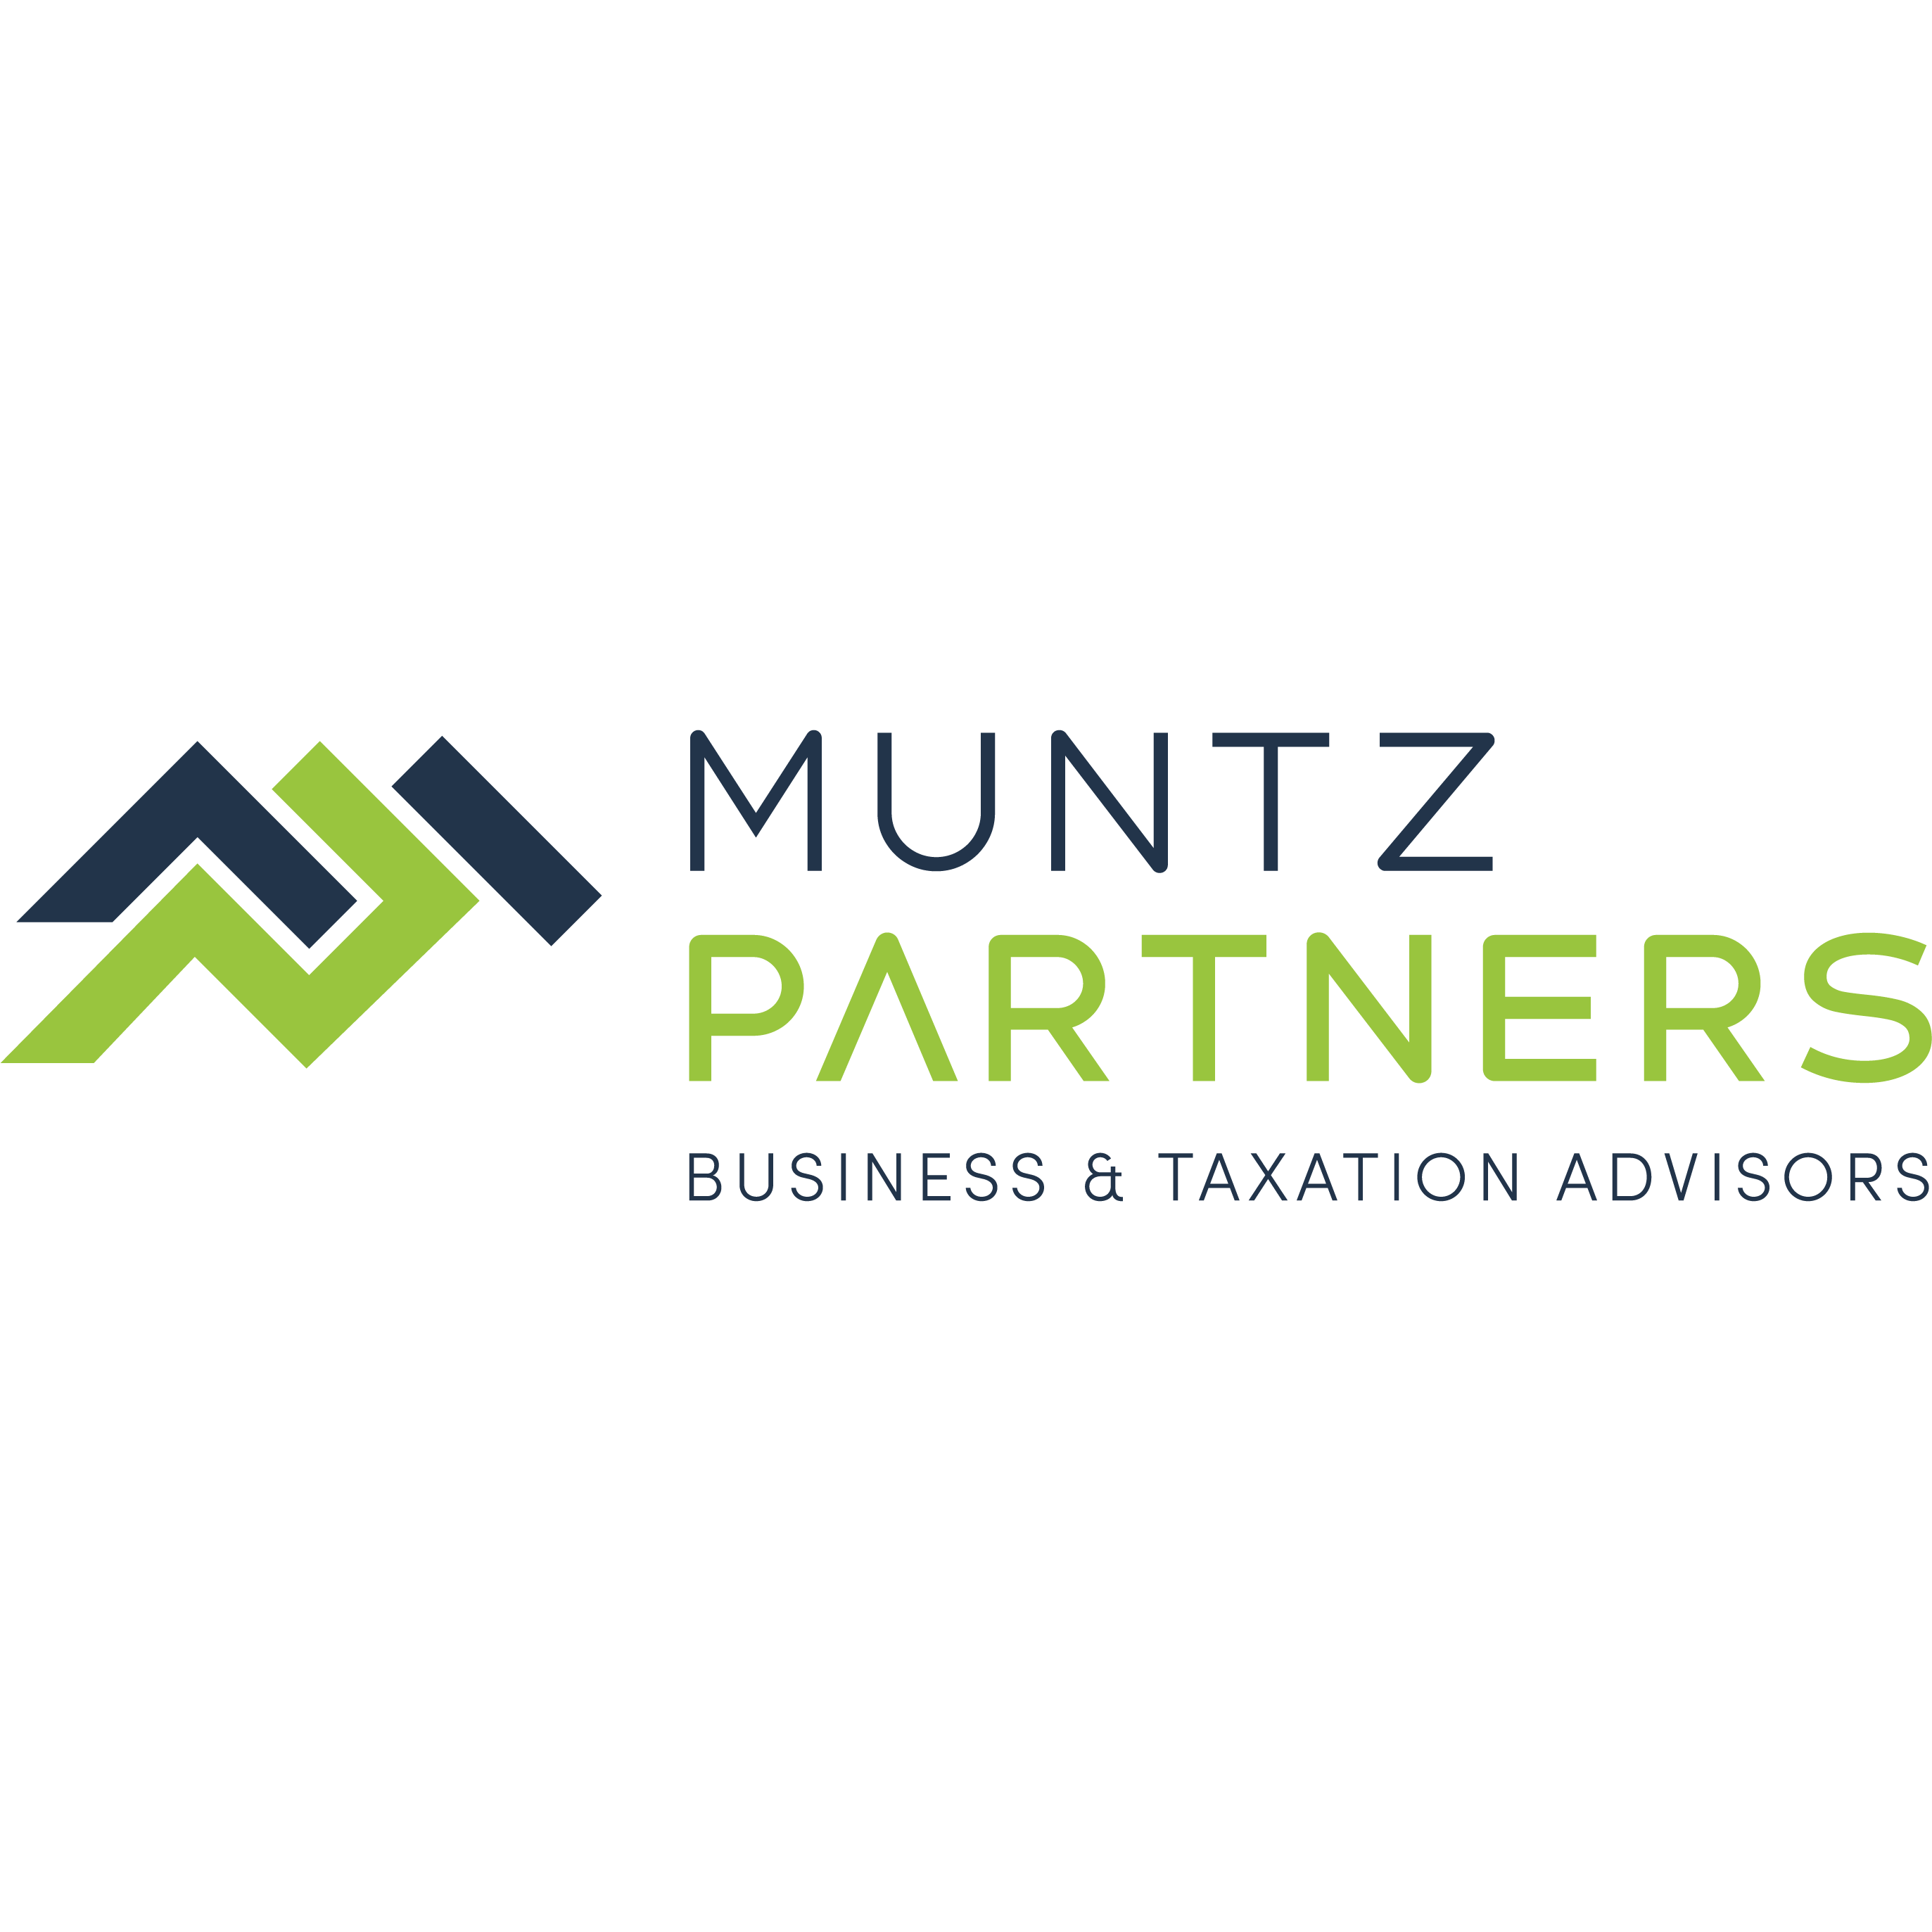 Muntz Partners Business & Taxation Advisors - Toodyay, WA 6566 - (08) 9574 2776 | ShowMeLocal.com